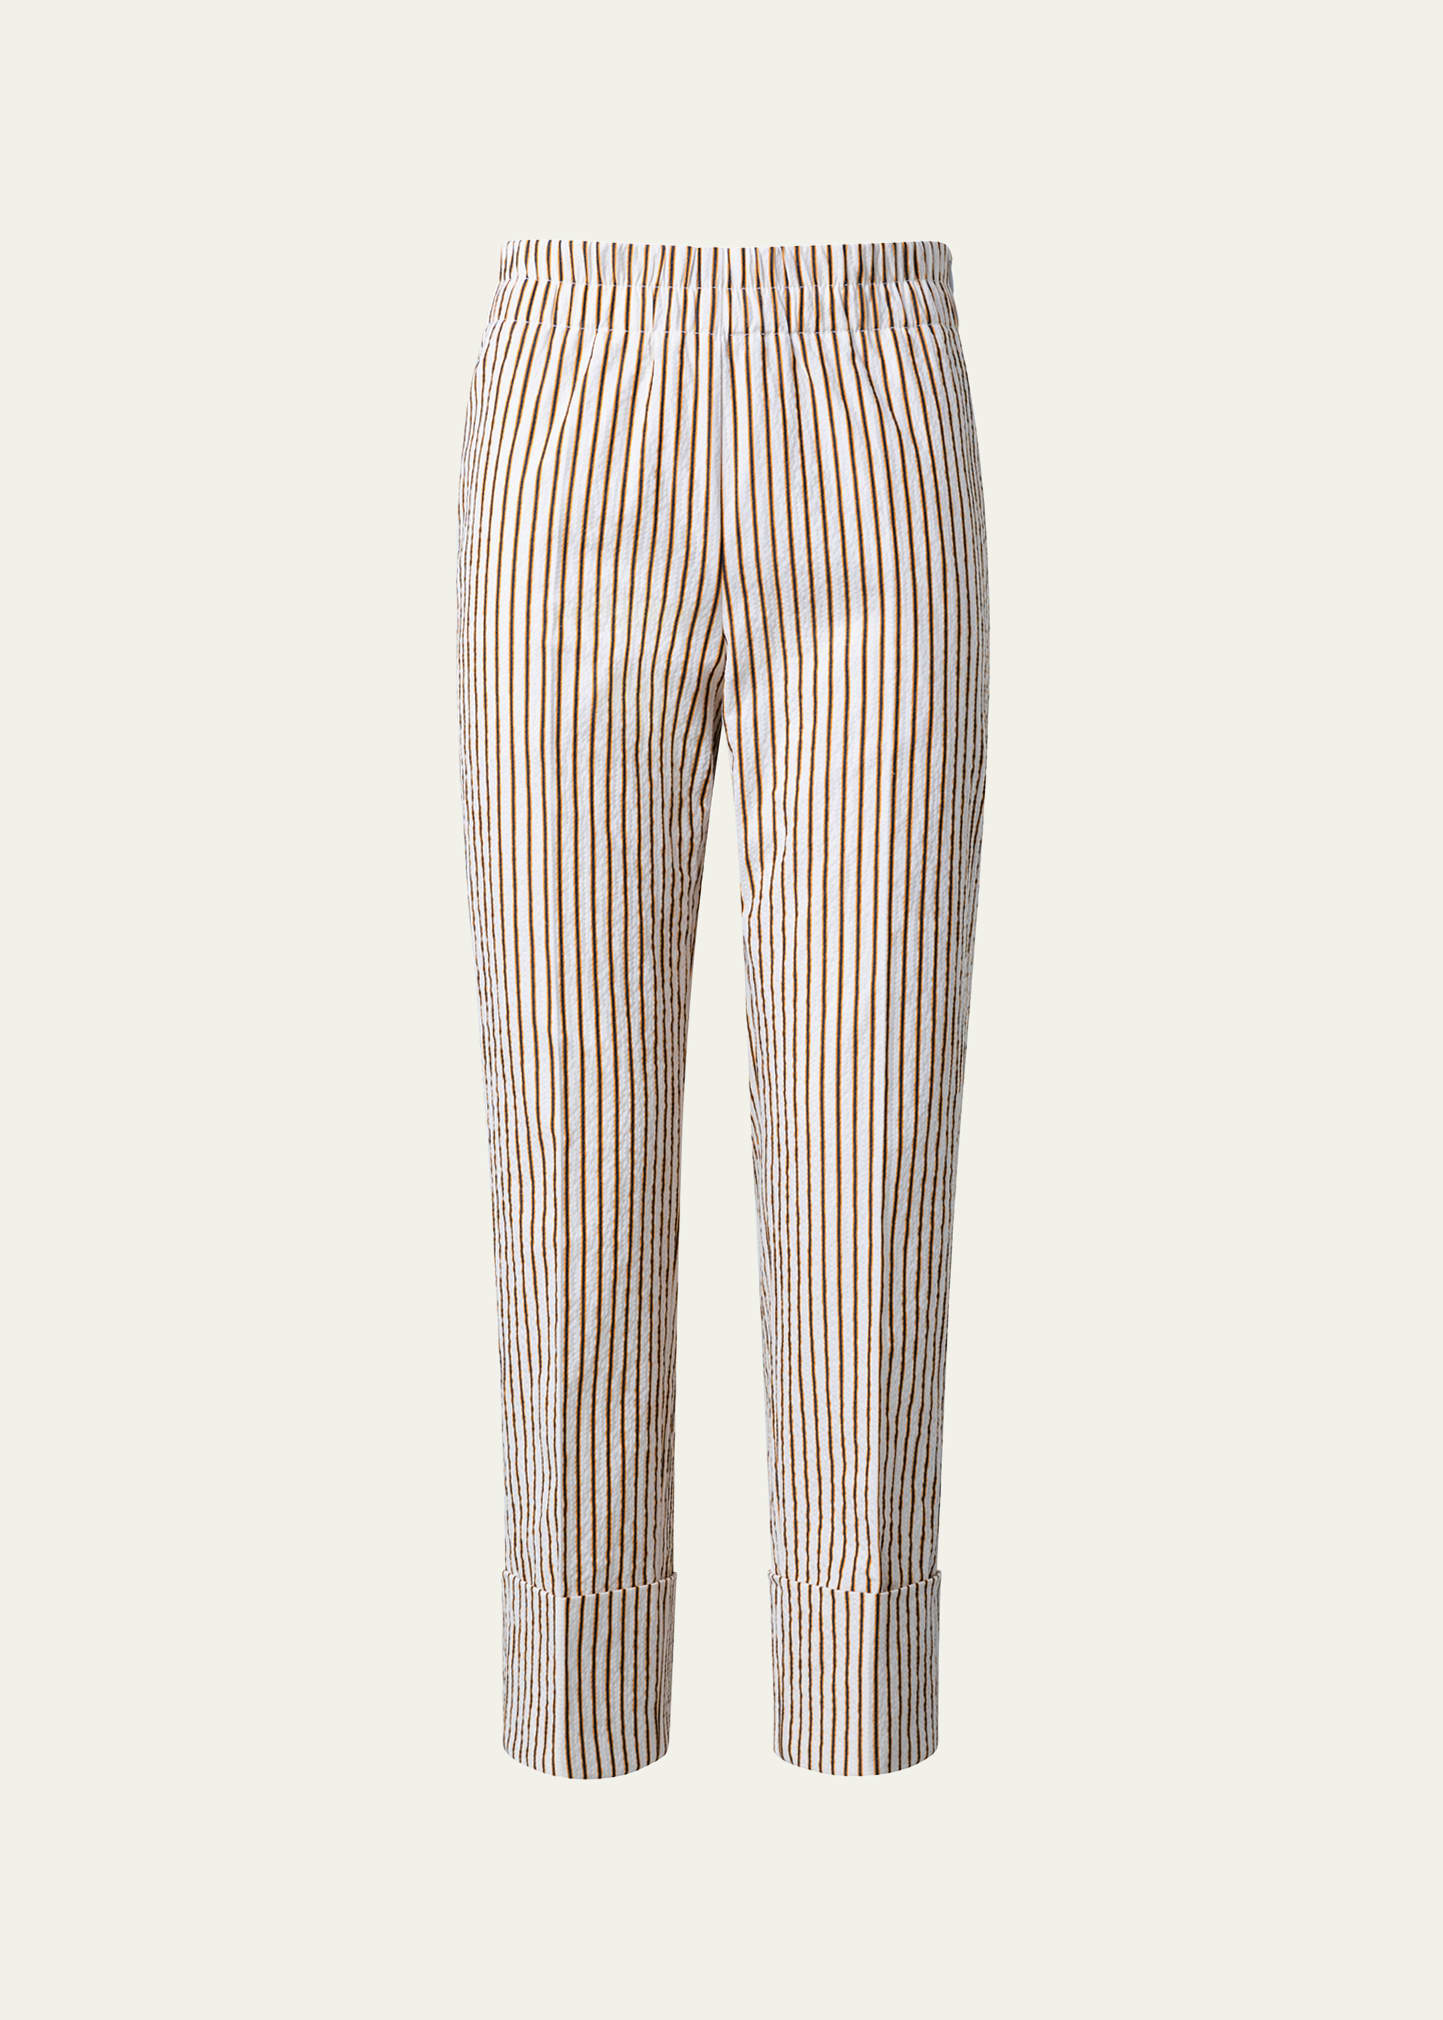 Farell Cotton Seersucker Striped Pants